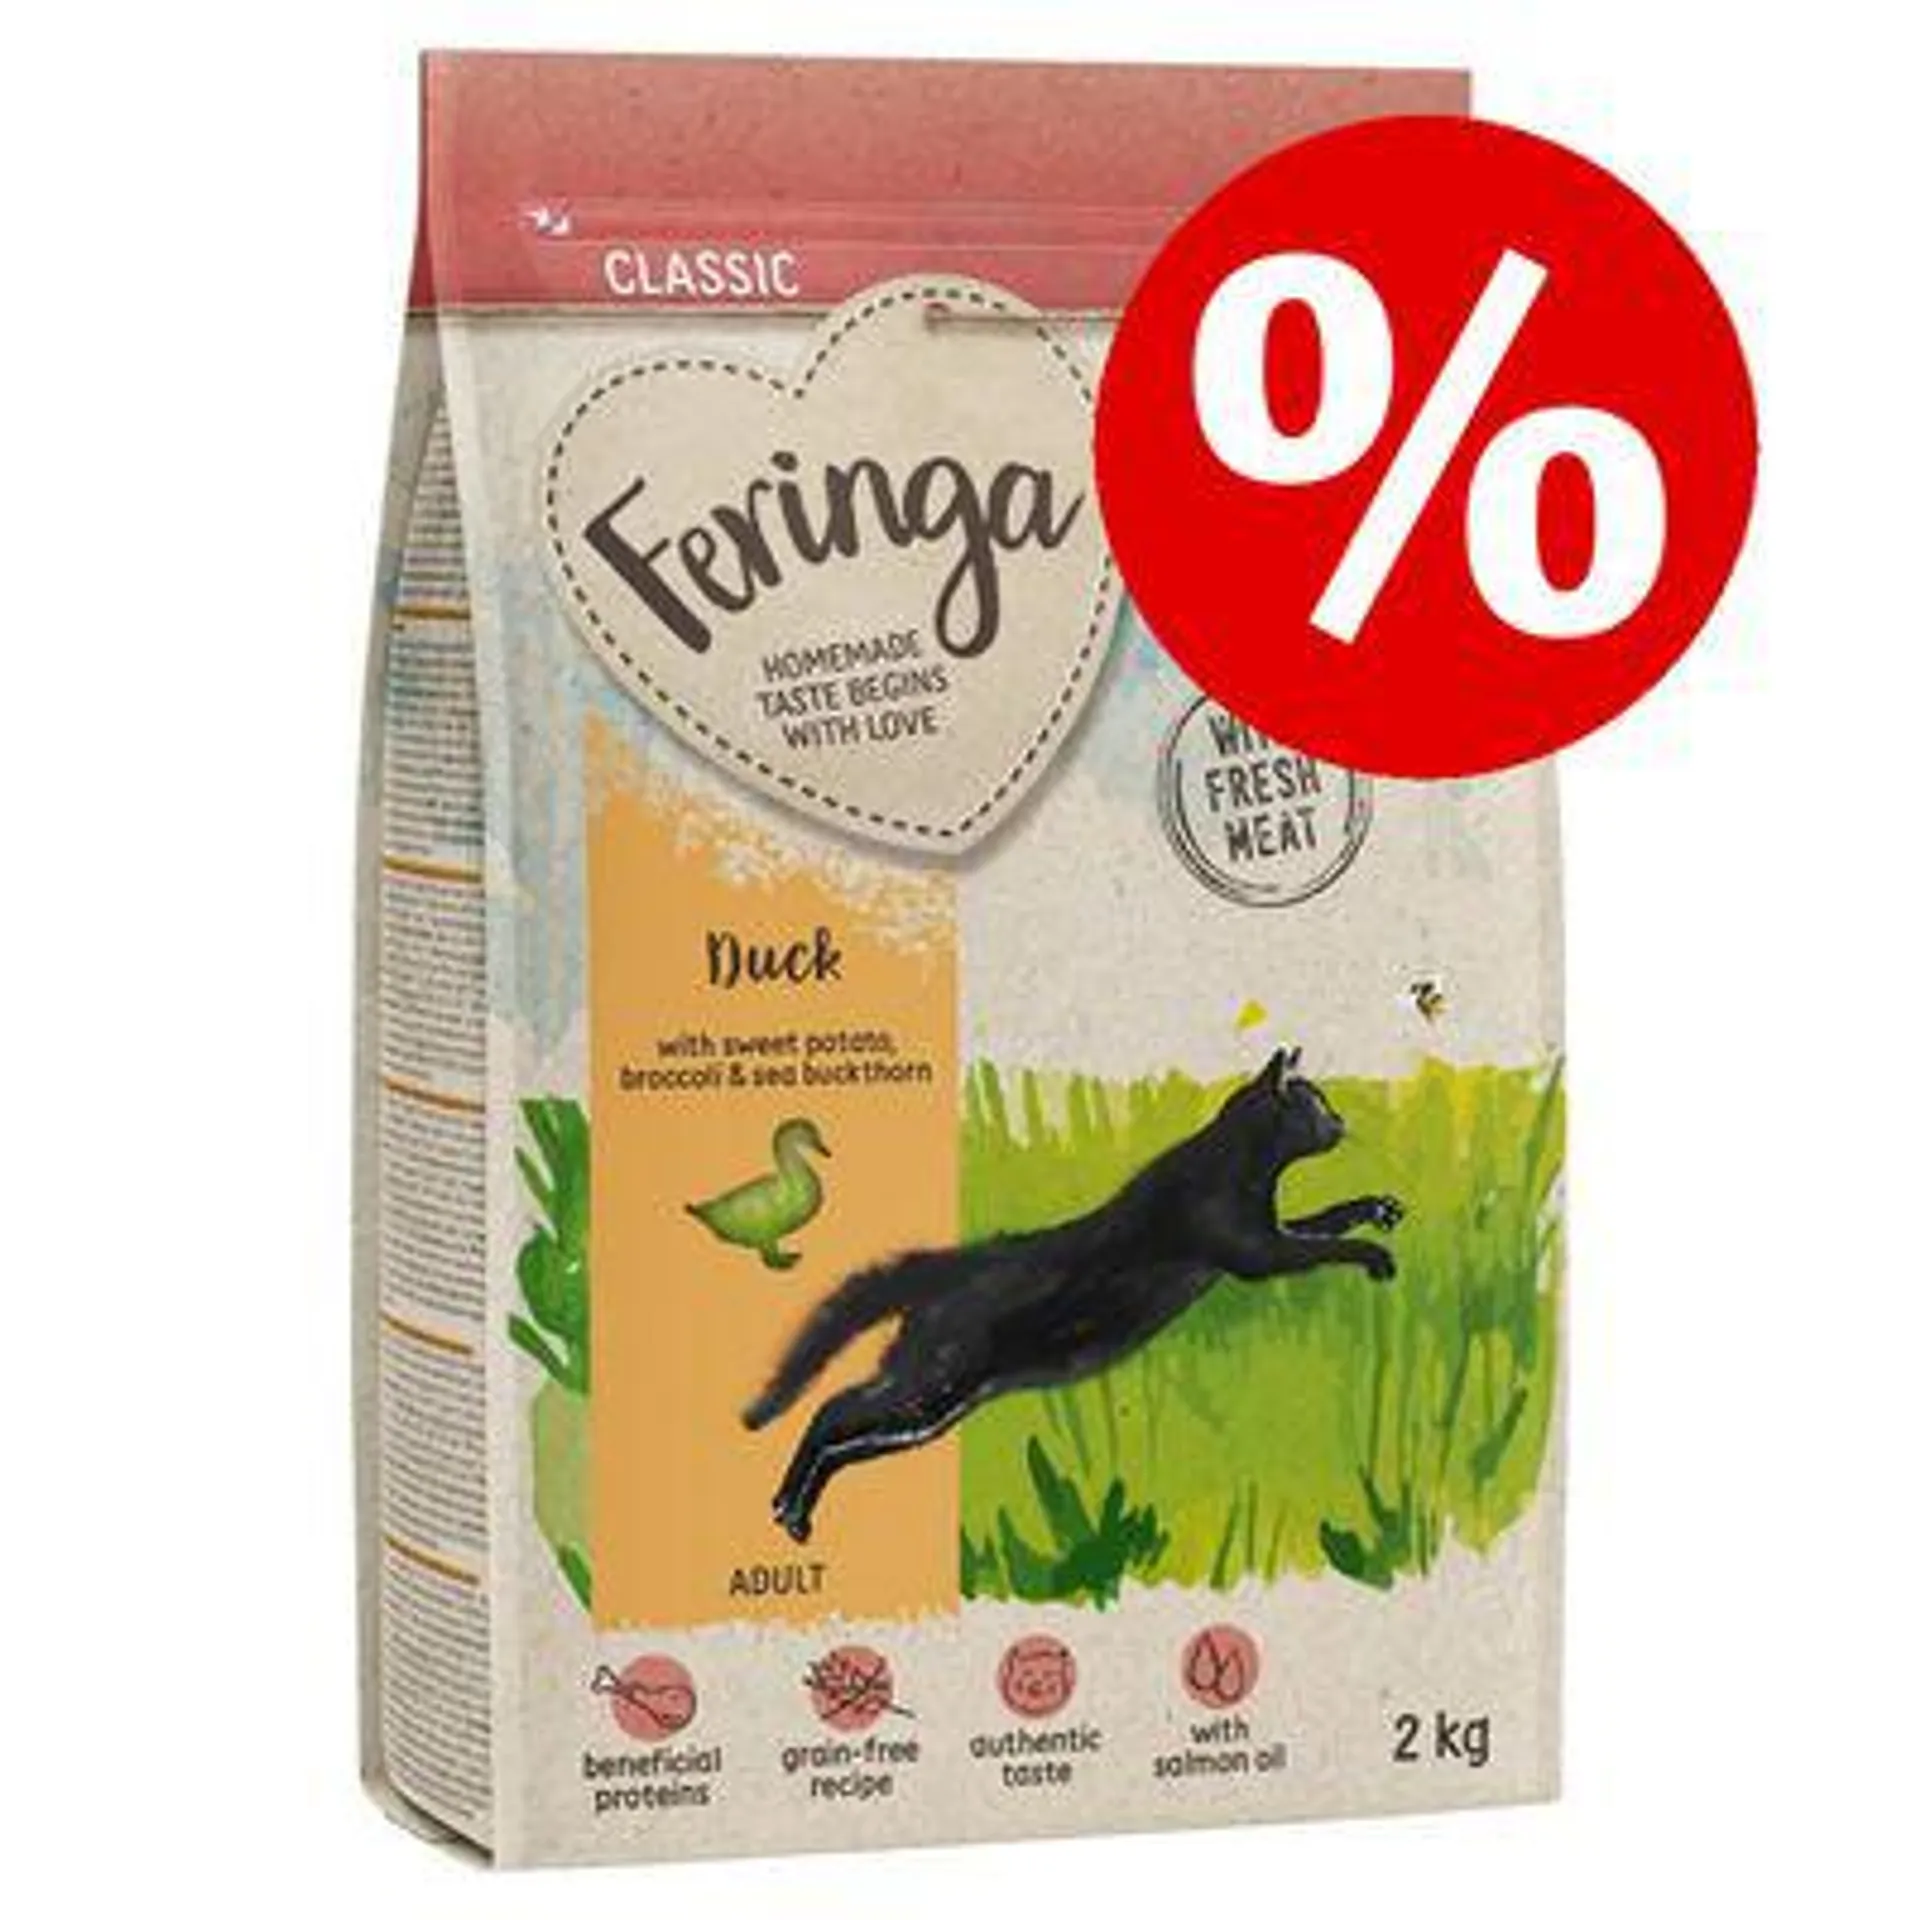 2kg Feringa Dry Cat Food - £3 Off!*